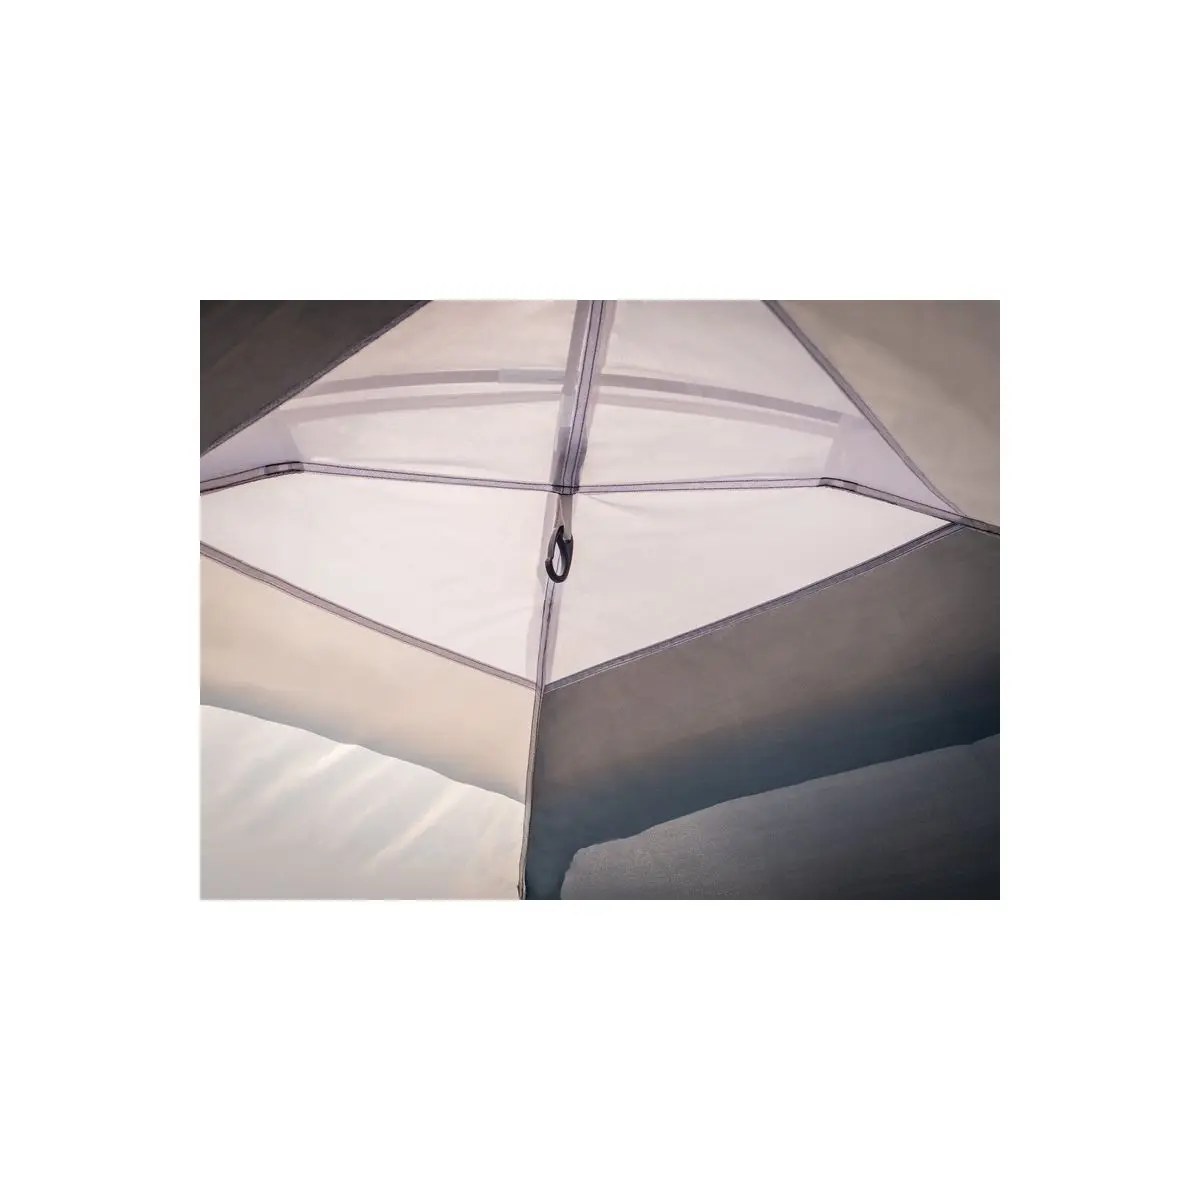 Zuhany sátor pelenkázó sátor - Campalto - 150 x 150 cm - magasság 210 cm